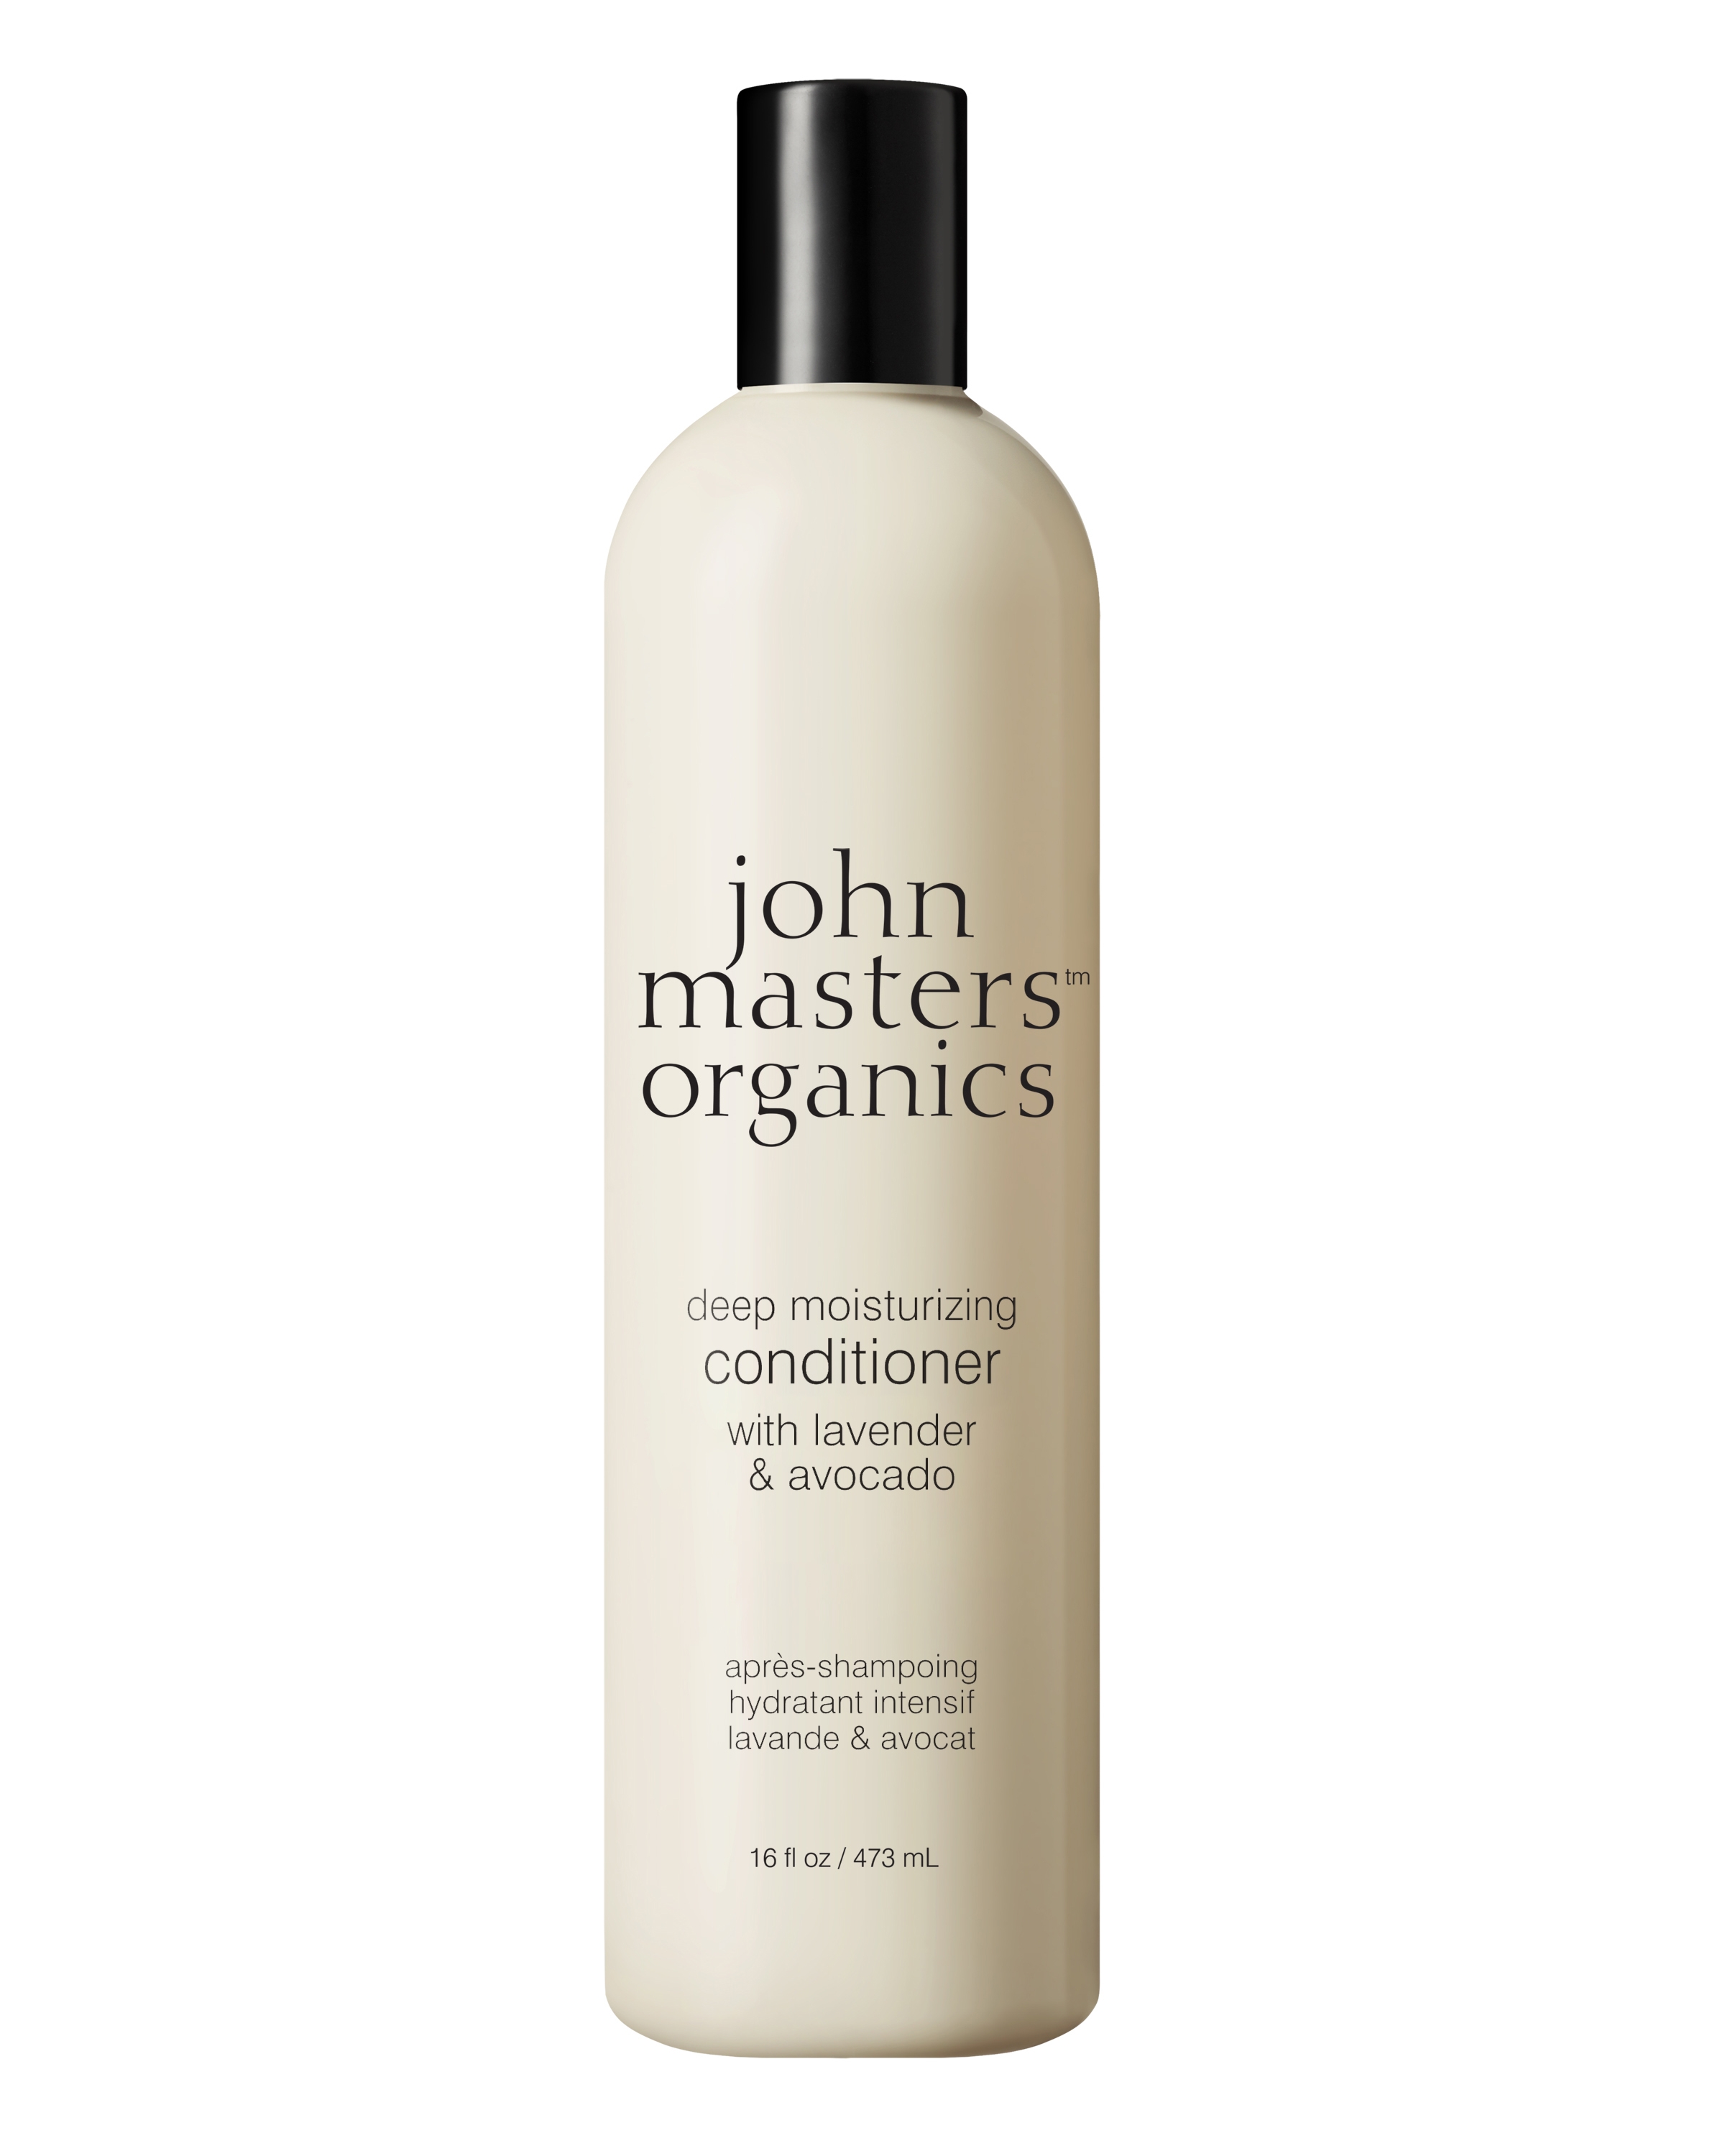 Image du produit de JMO Hair Care - Deep Moisturizing Conditioner with Lavender & Avocado